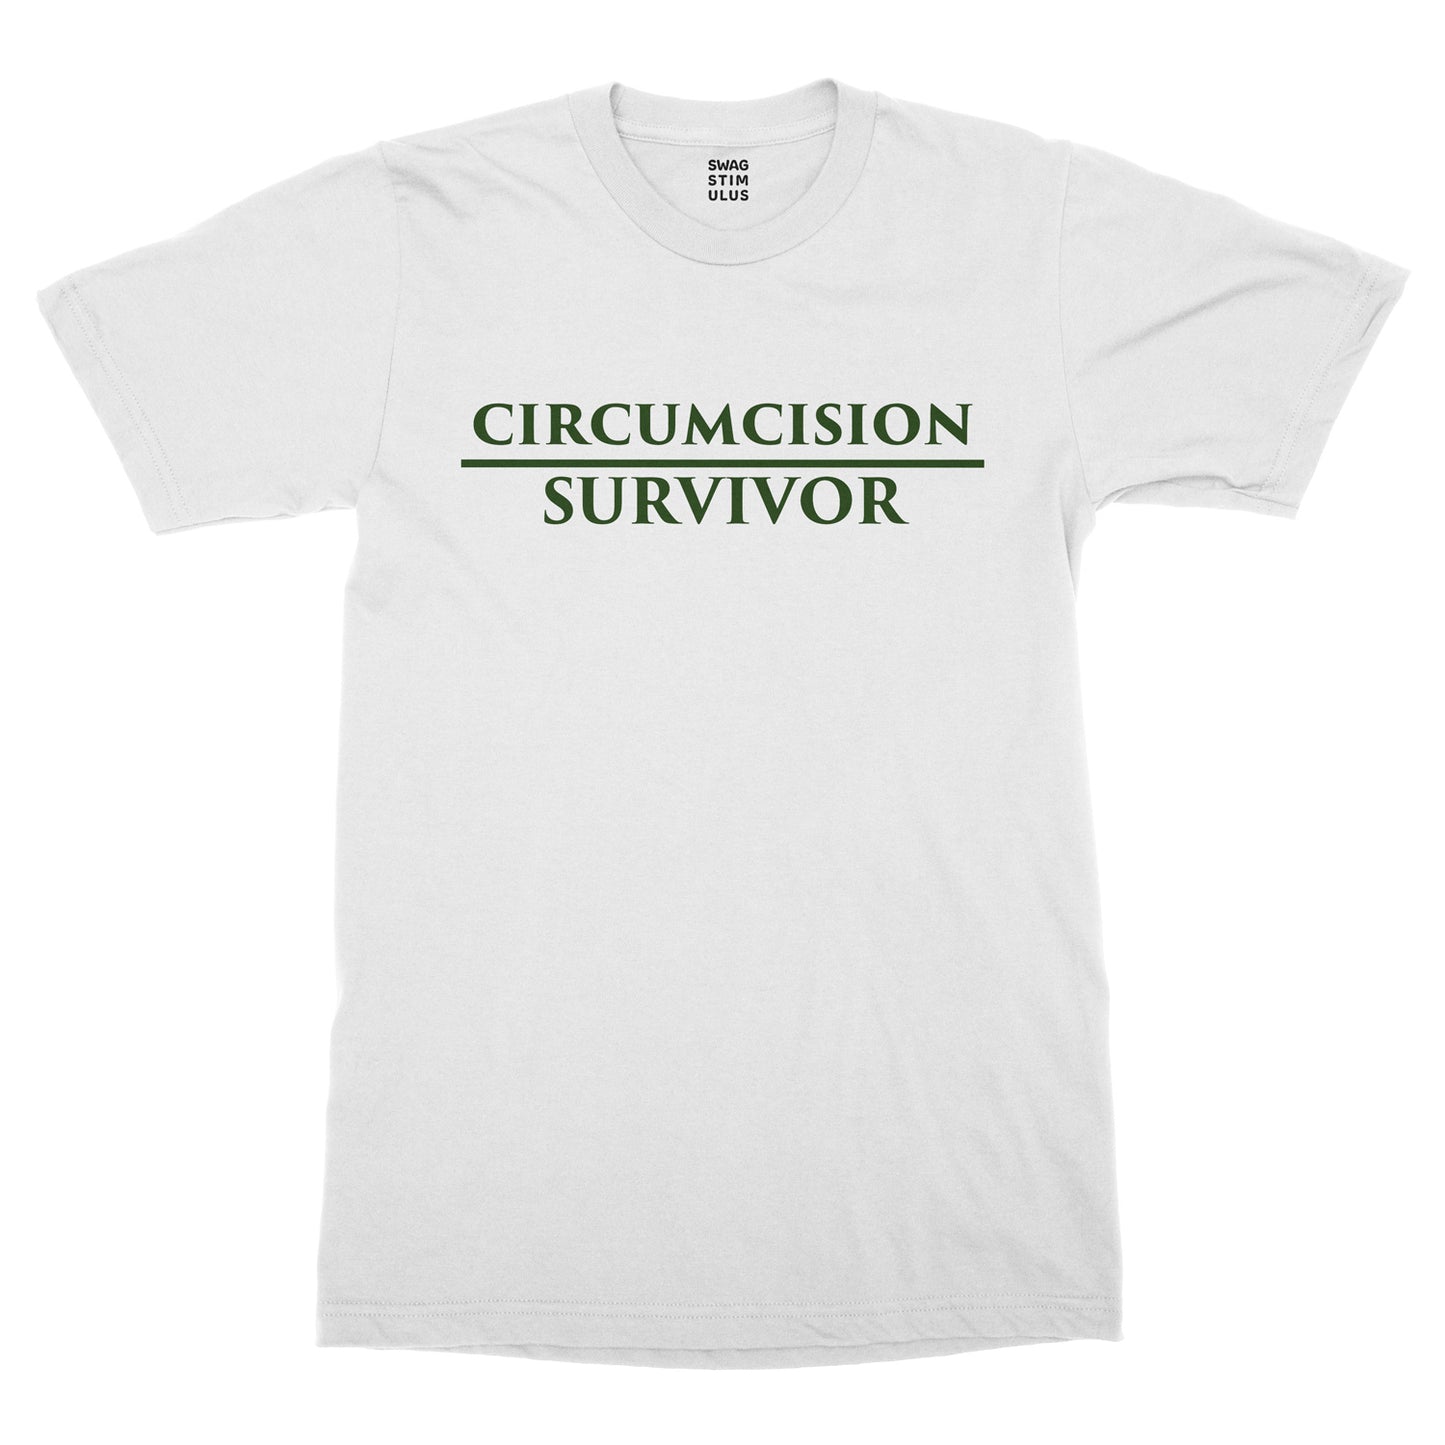 Circumcision Survivor T-Shirt